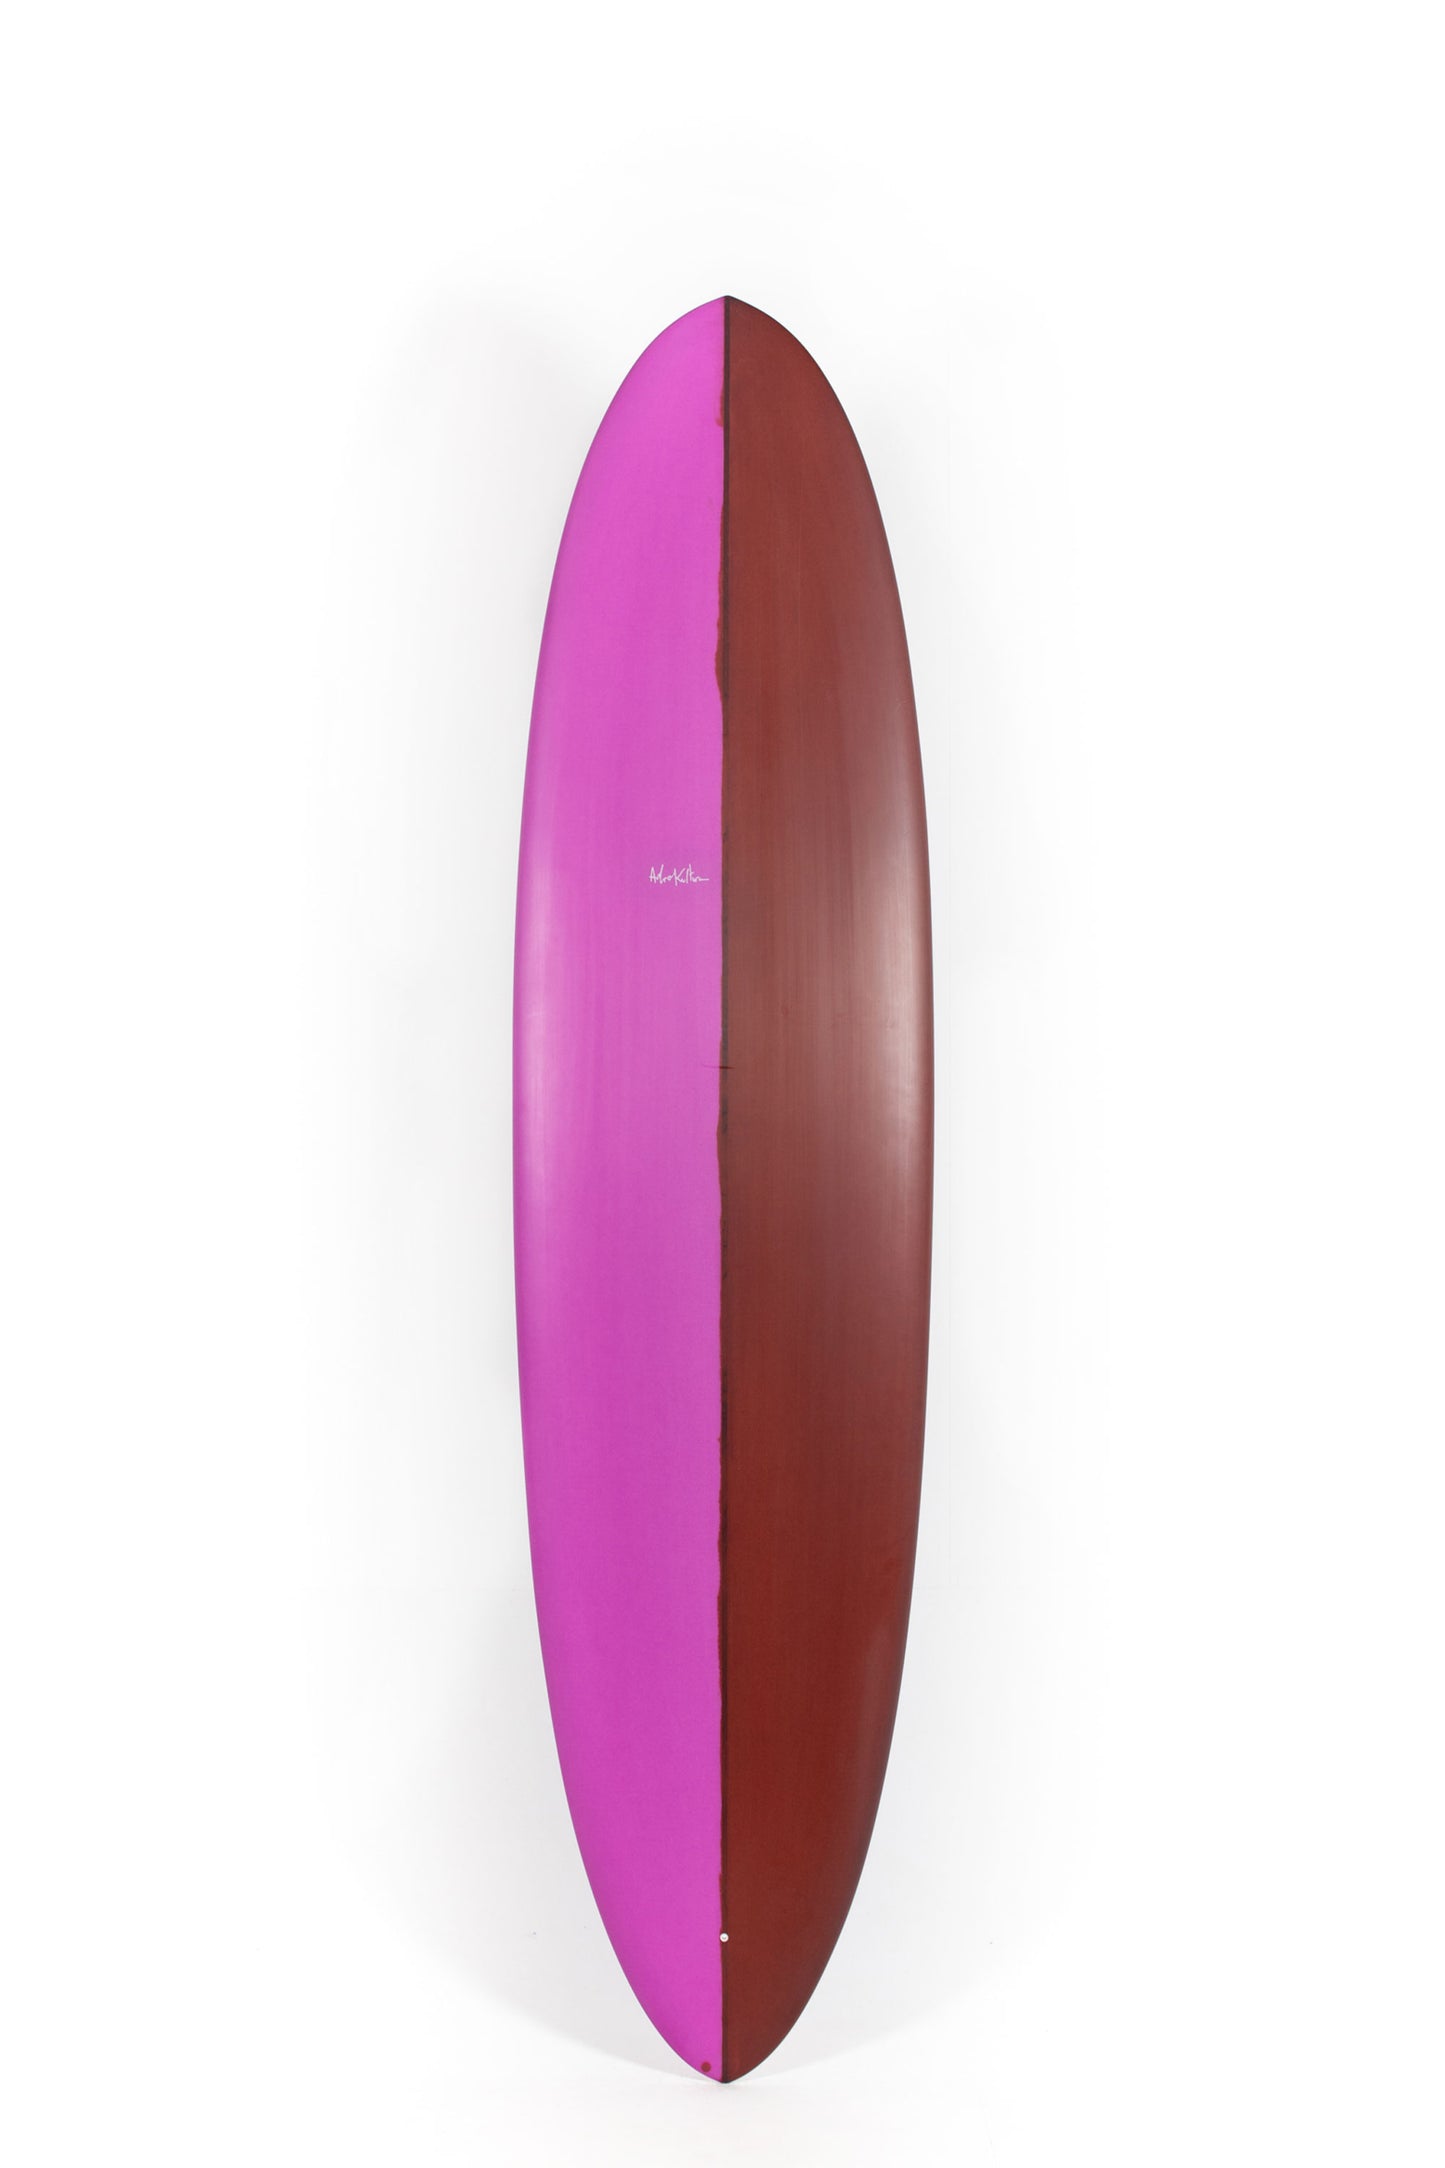 Pukas Surf Shop - Adrokultura Surfboards - SINGLE EGG - 7'8" x 22 x 2 7/8 - SINGLEEGG78